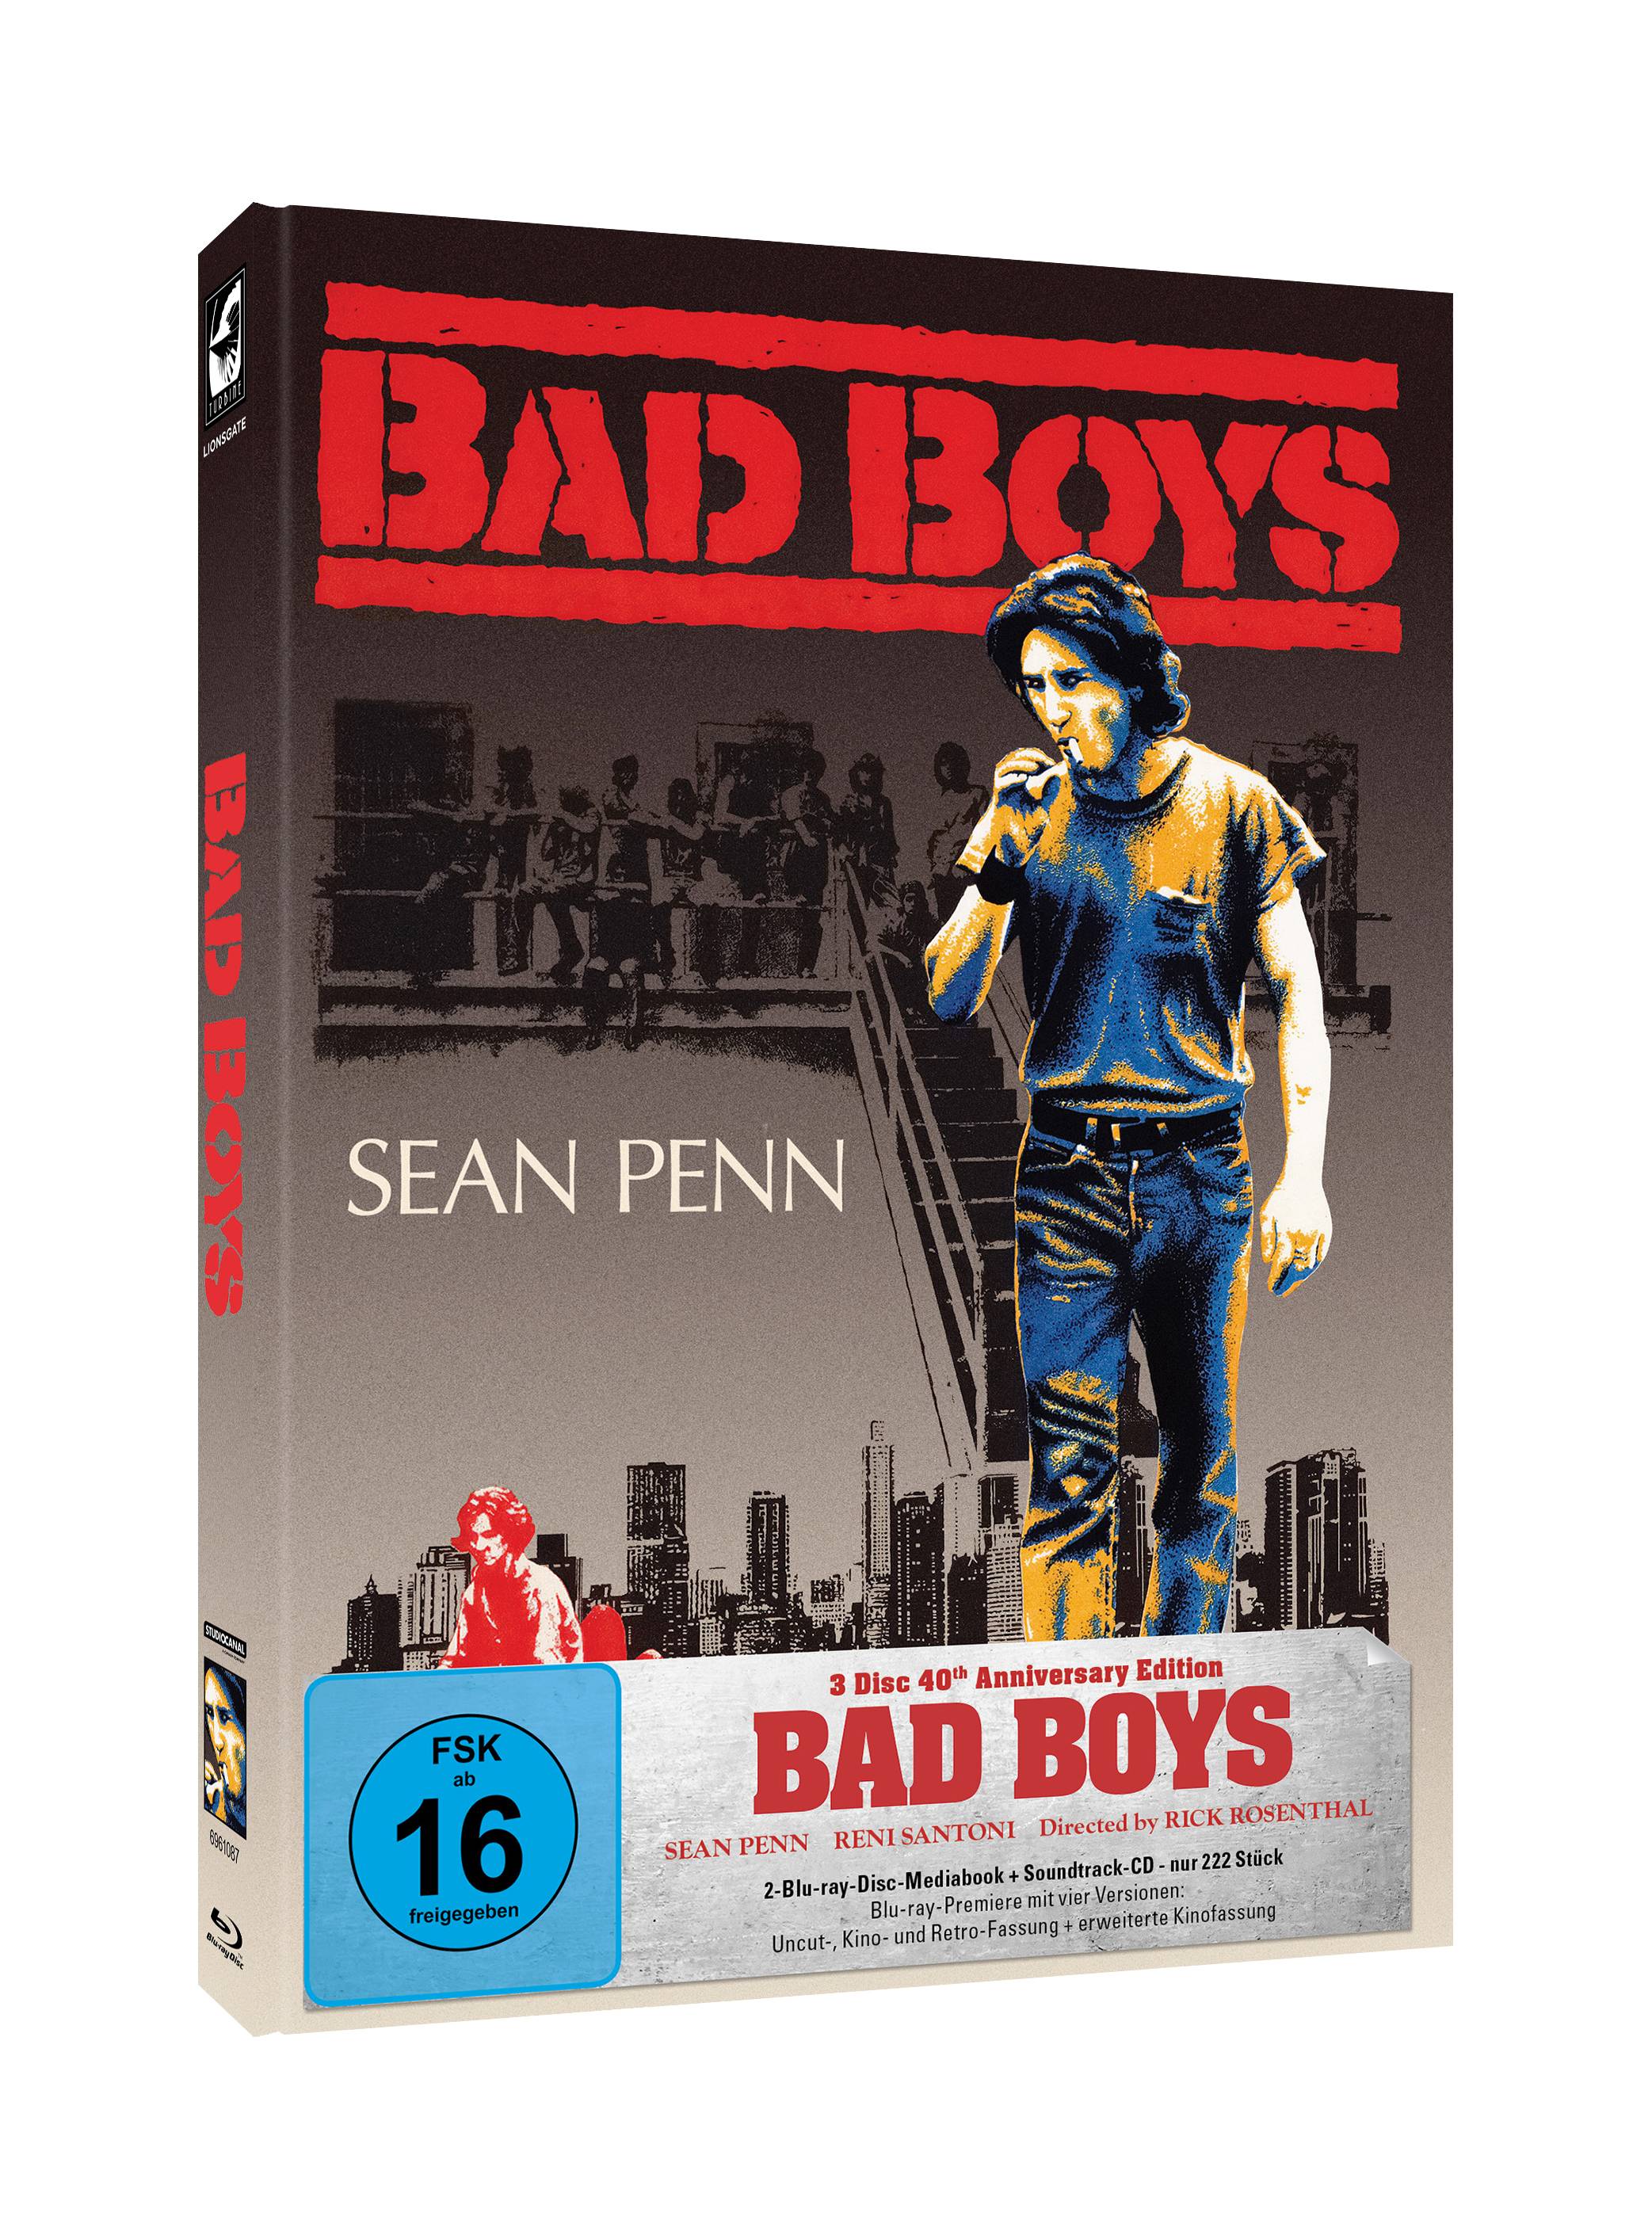 Bad Boys - 40th Anniversary Edition | Mediabook (2x BD + Soundtrack-CD) FR-Artwork - 222 Stück